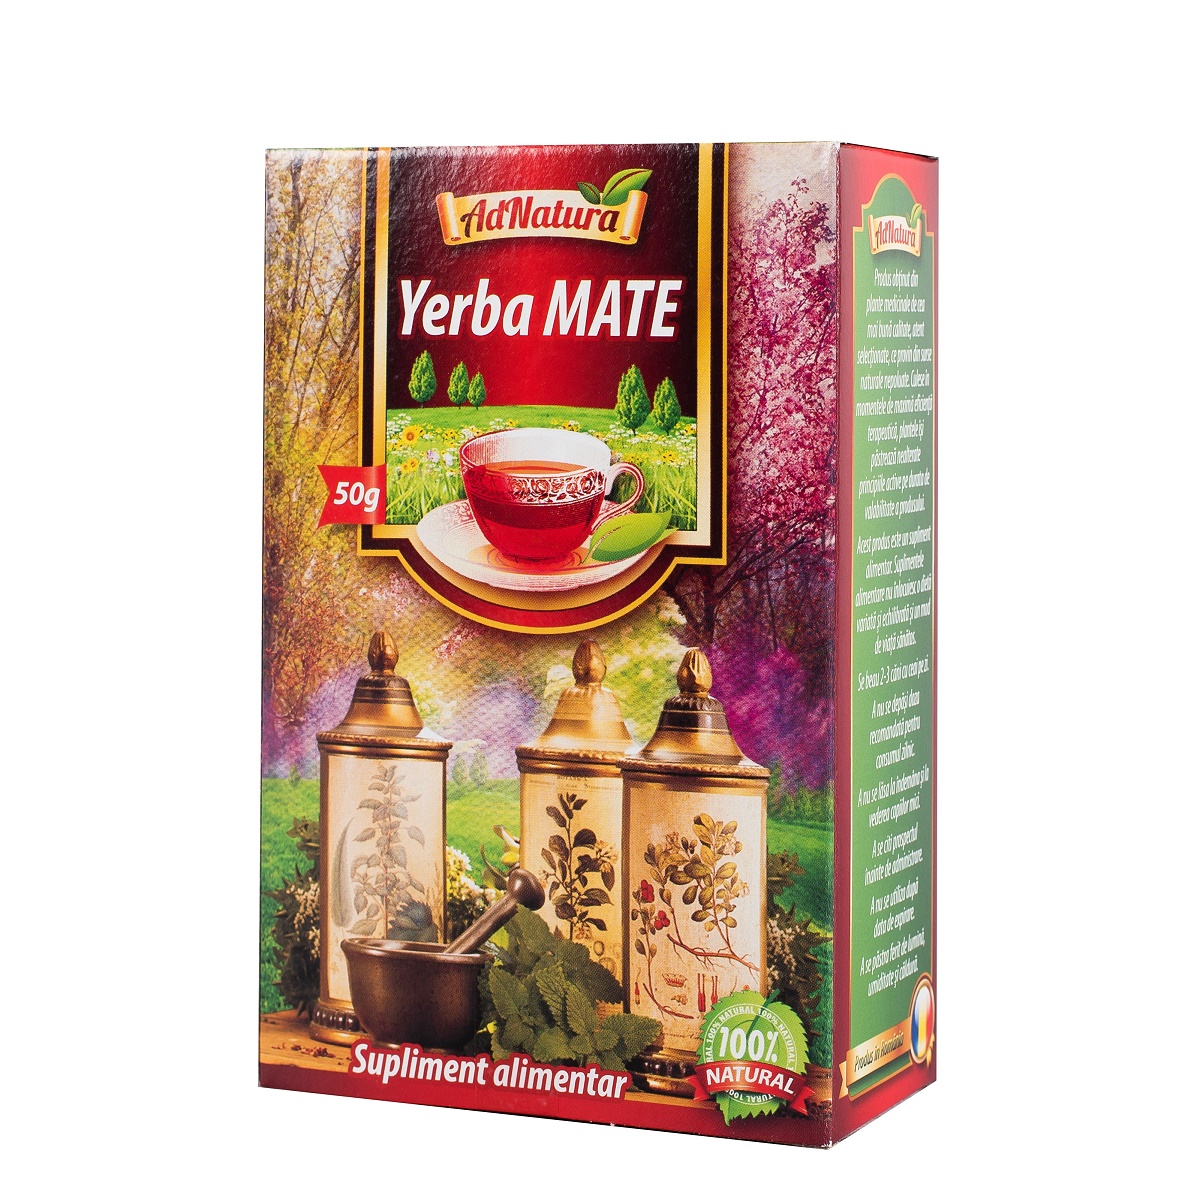 Ceai Yerba Mate, 50 g, AdNatura